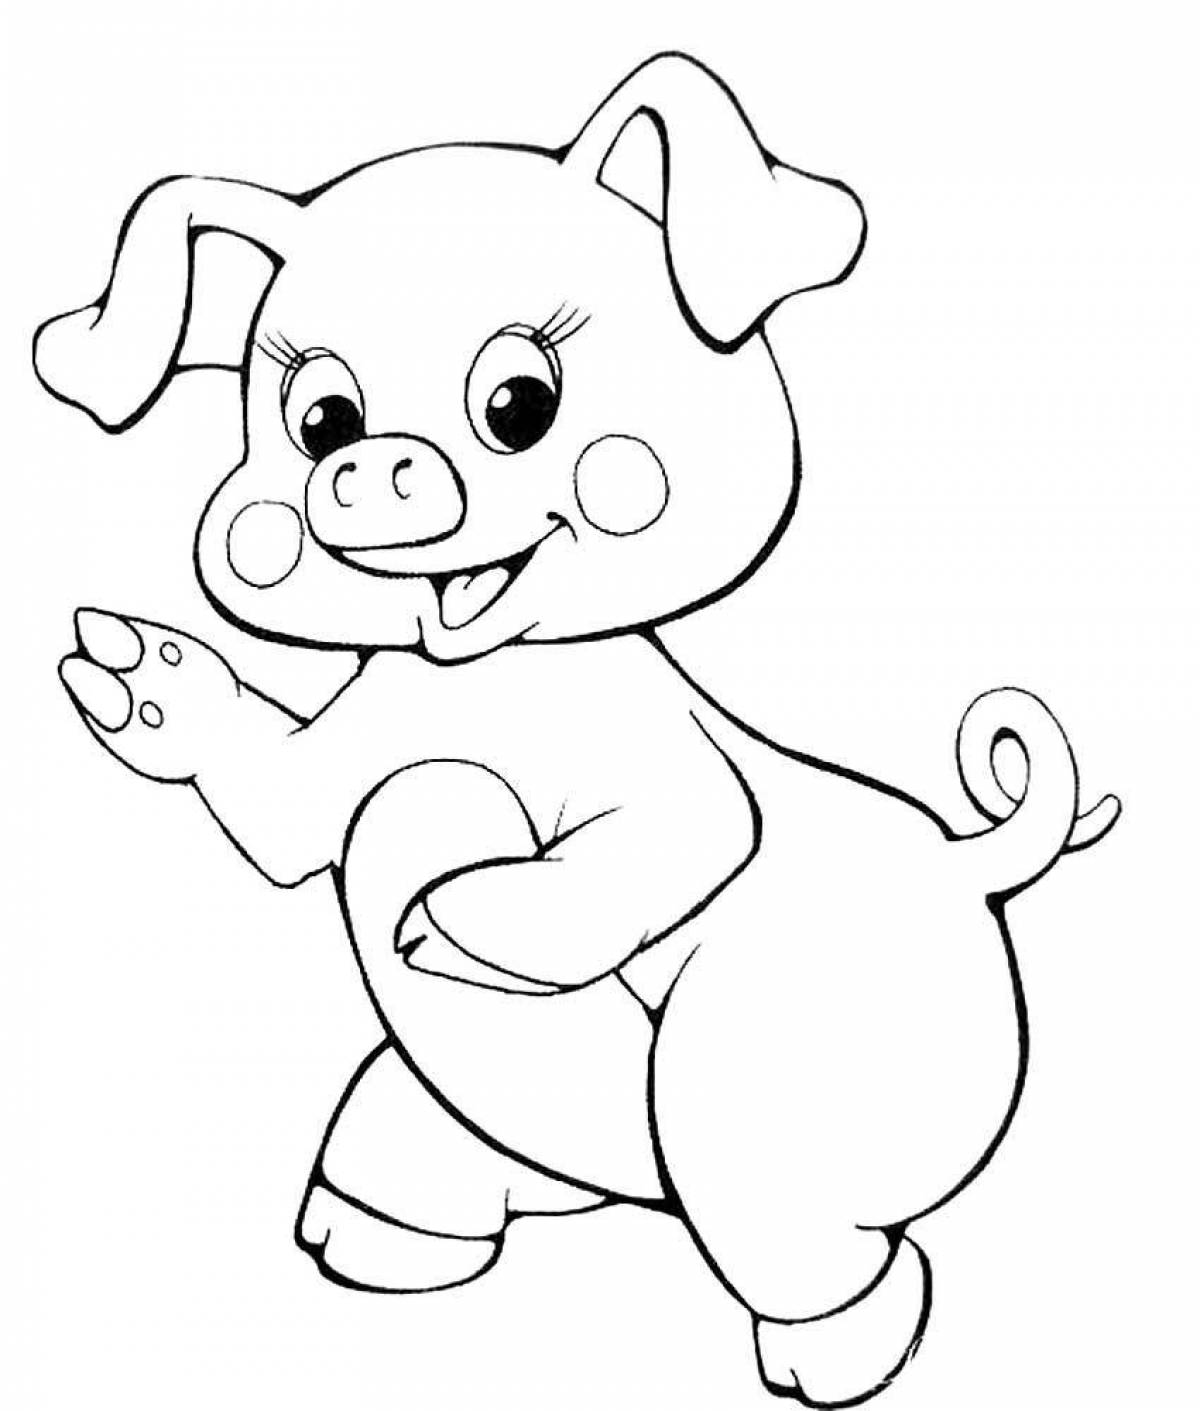 Sparkling pig coloring book for kids